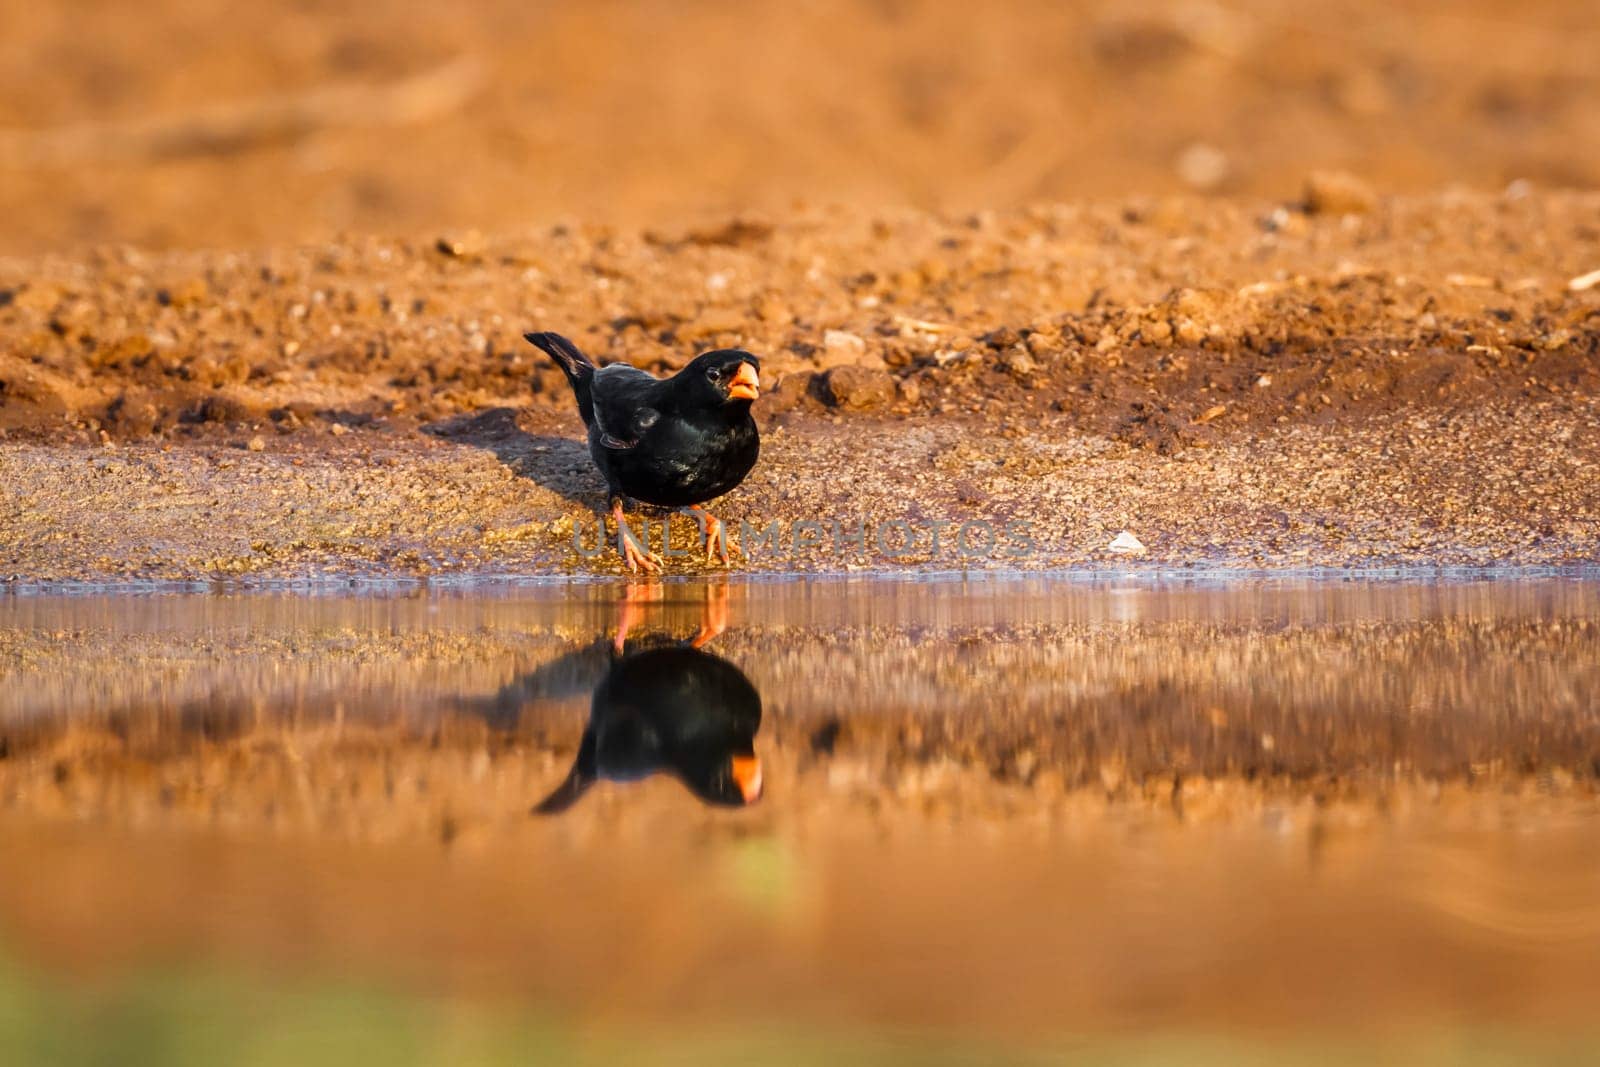 Village indigobird in Kruger National park, South Africa by PACOCOMO